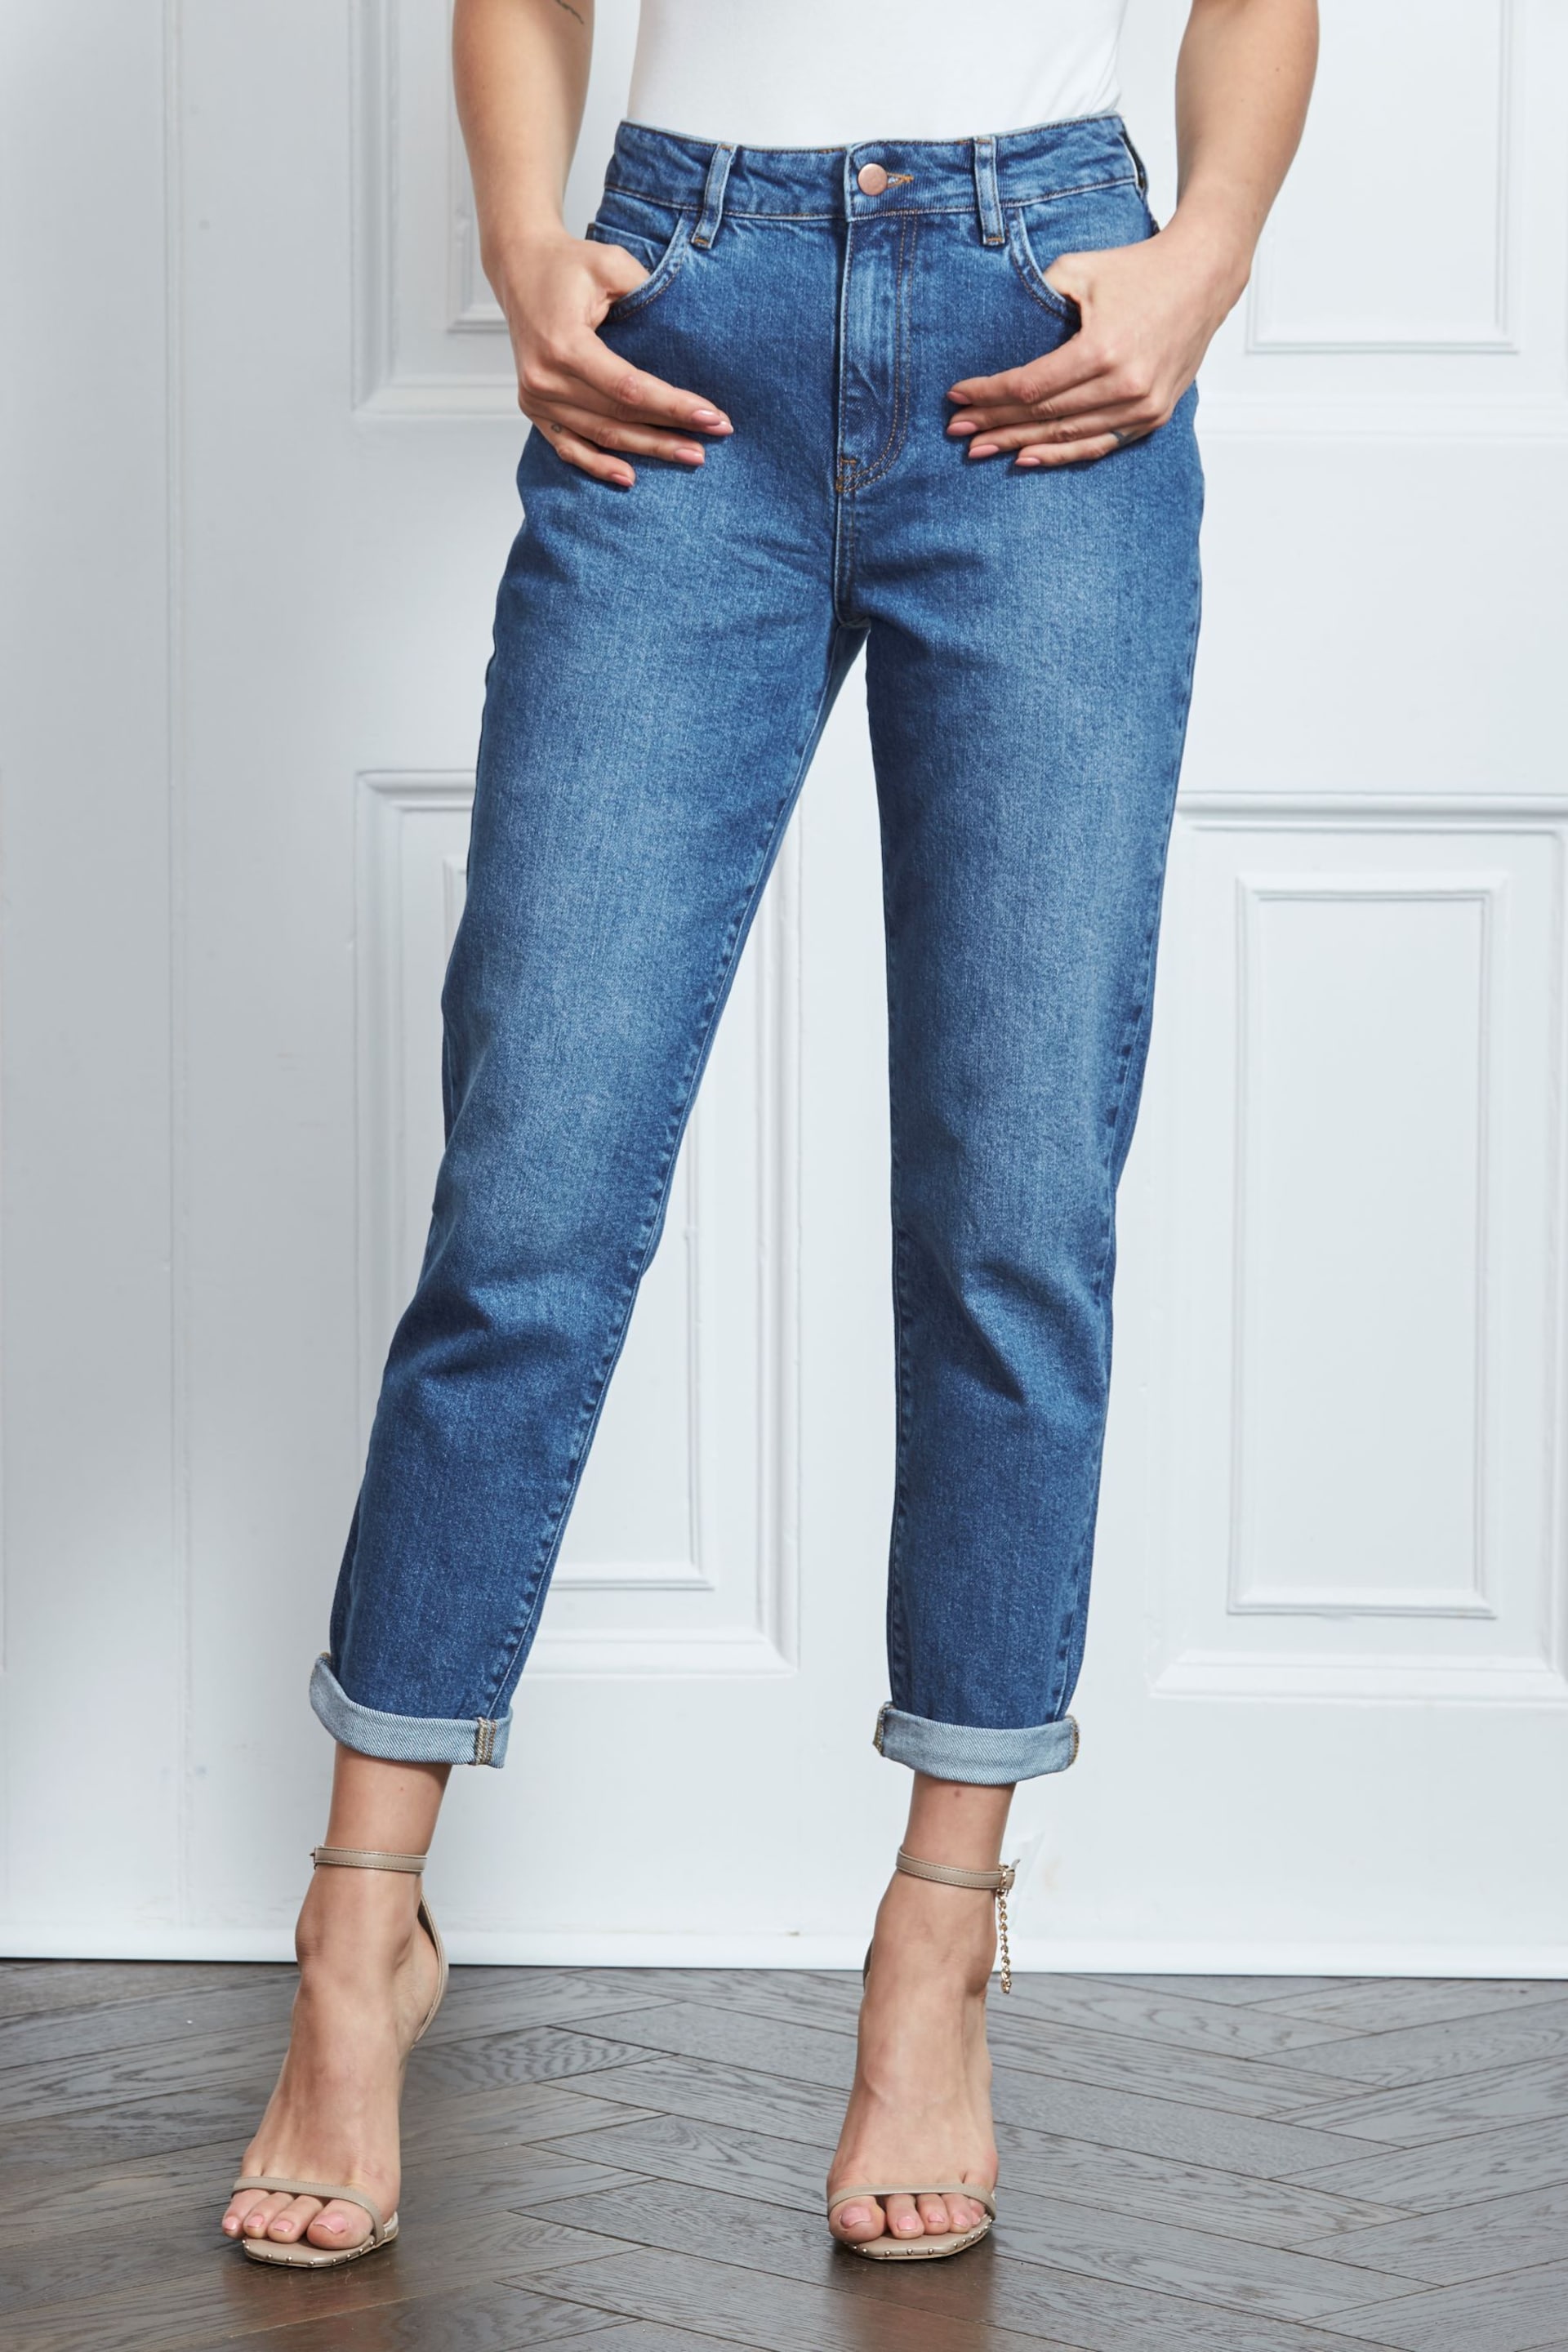 Sosandar Blue Denim Tall Slim Leg Mom Jeans - Image 2 of 5